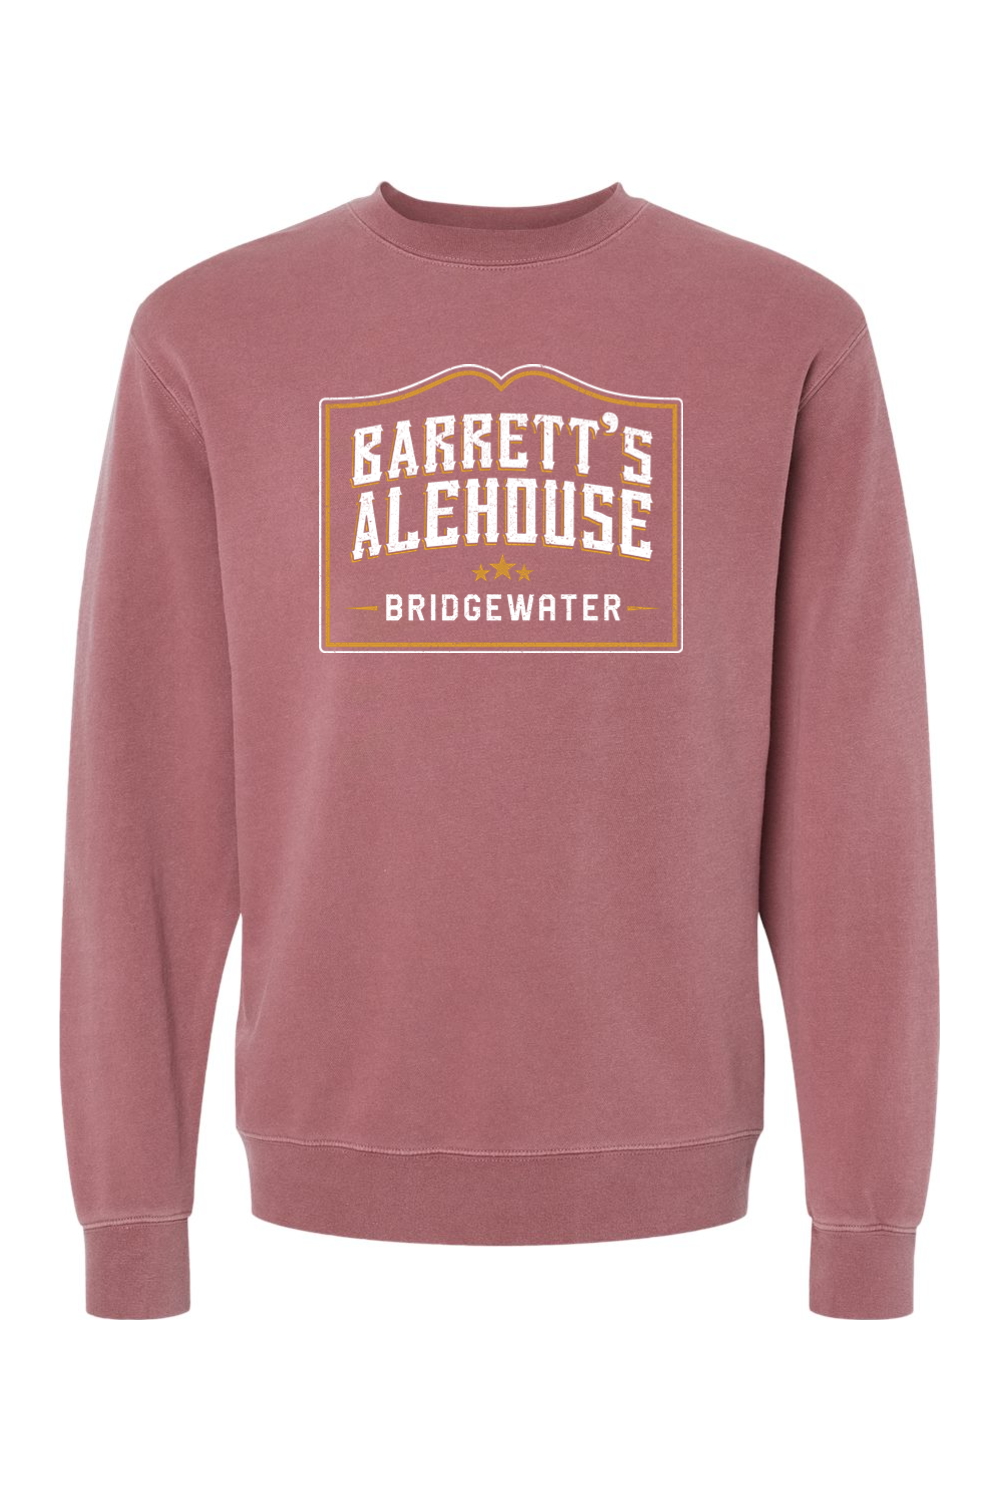 Barrett's Alehouse Bridgewater Pigment Dyed Crewneck Sweatshirt